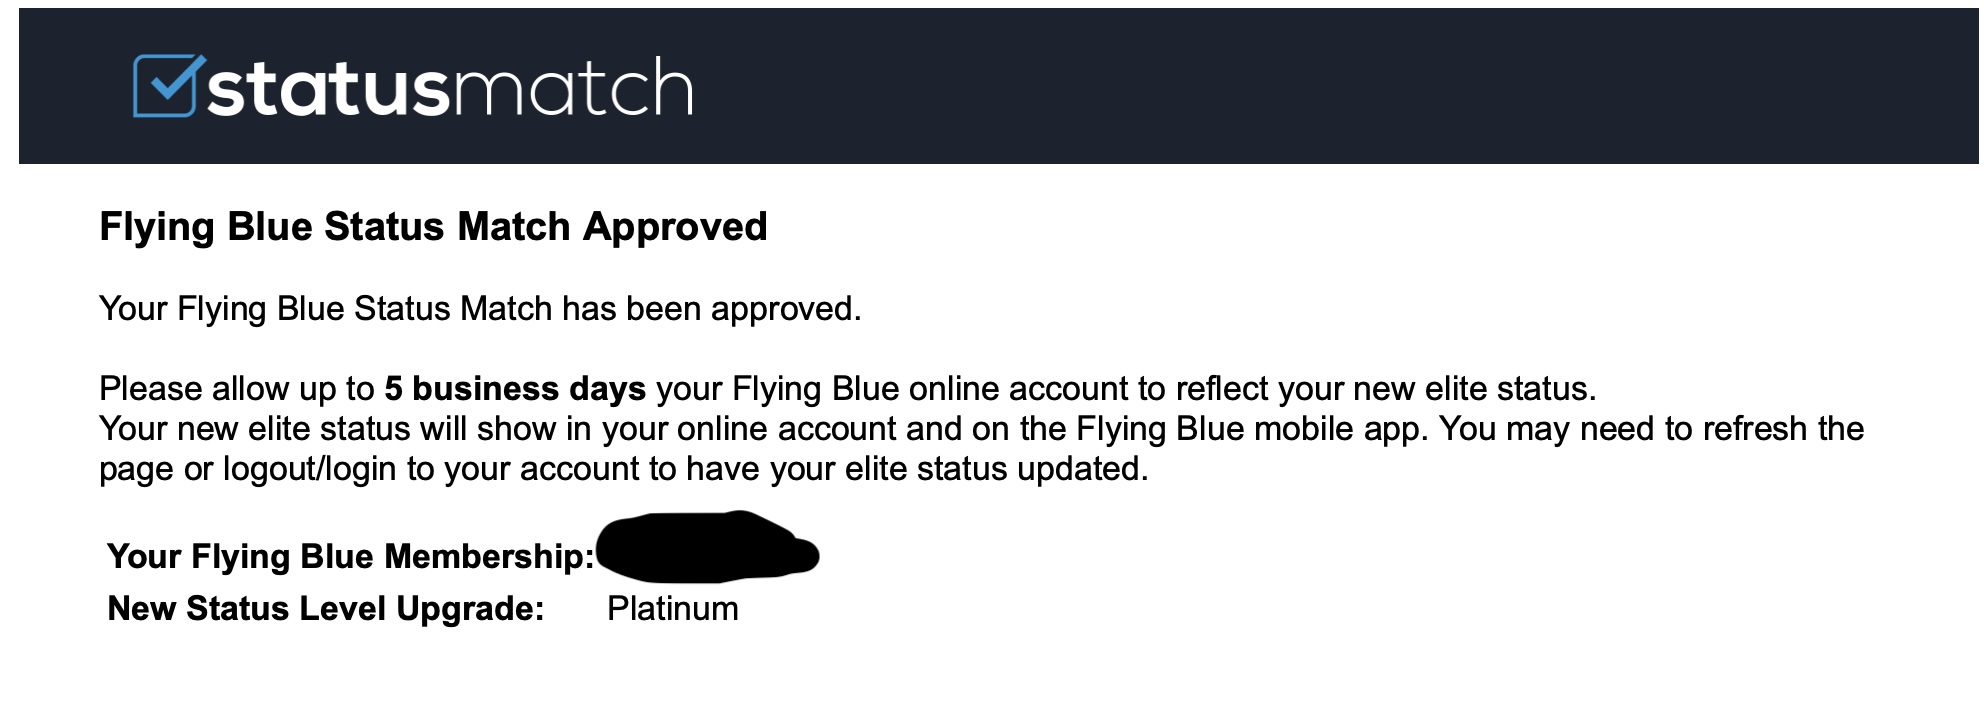 fly blue match approved.jpg